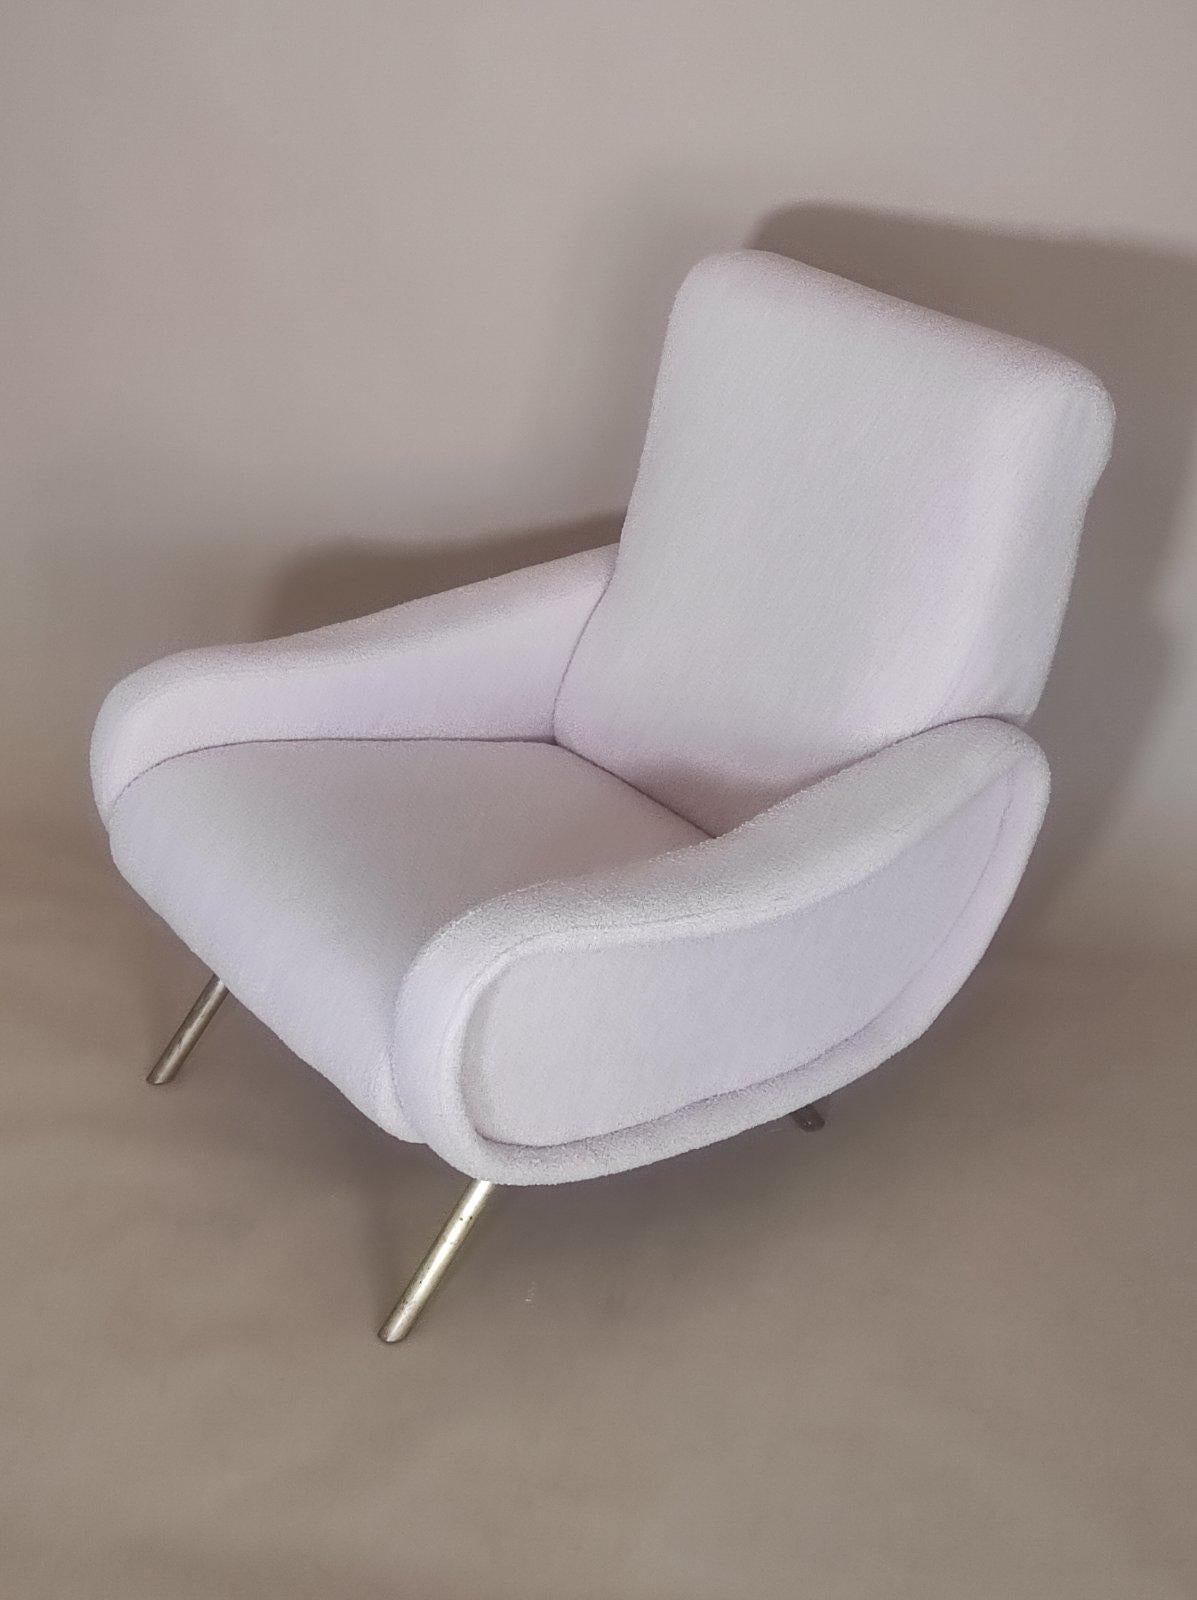 Brass Marco Zanuso Lady Chair 1950s For Sale